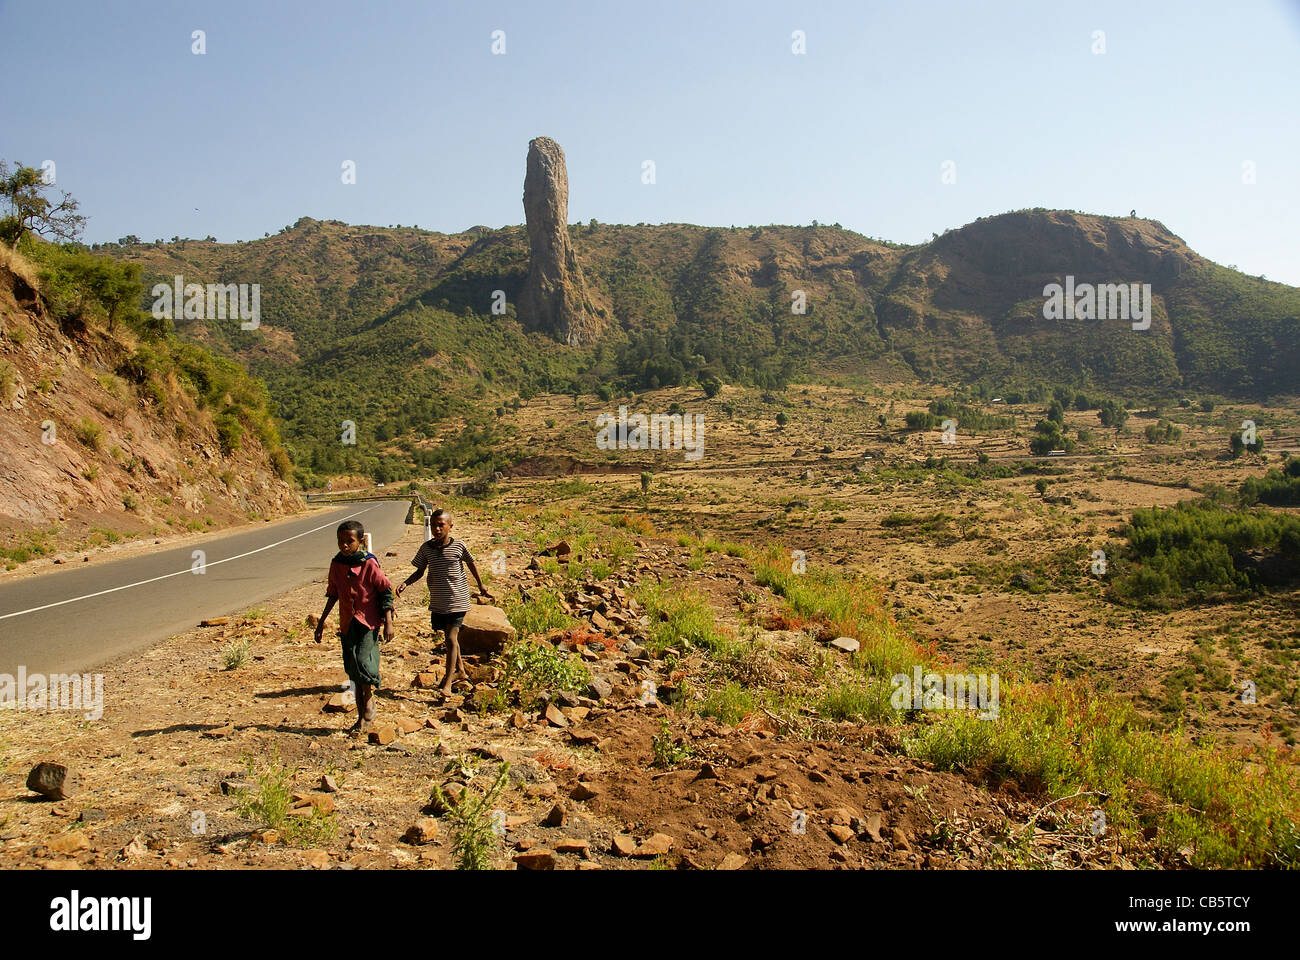 Ethiopia, Amhara Region two children walk in the landscape Stock Photo